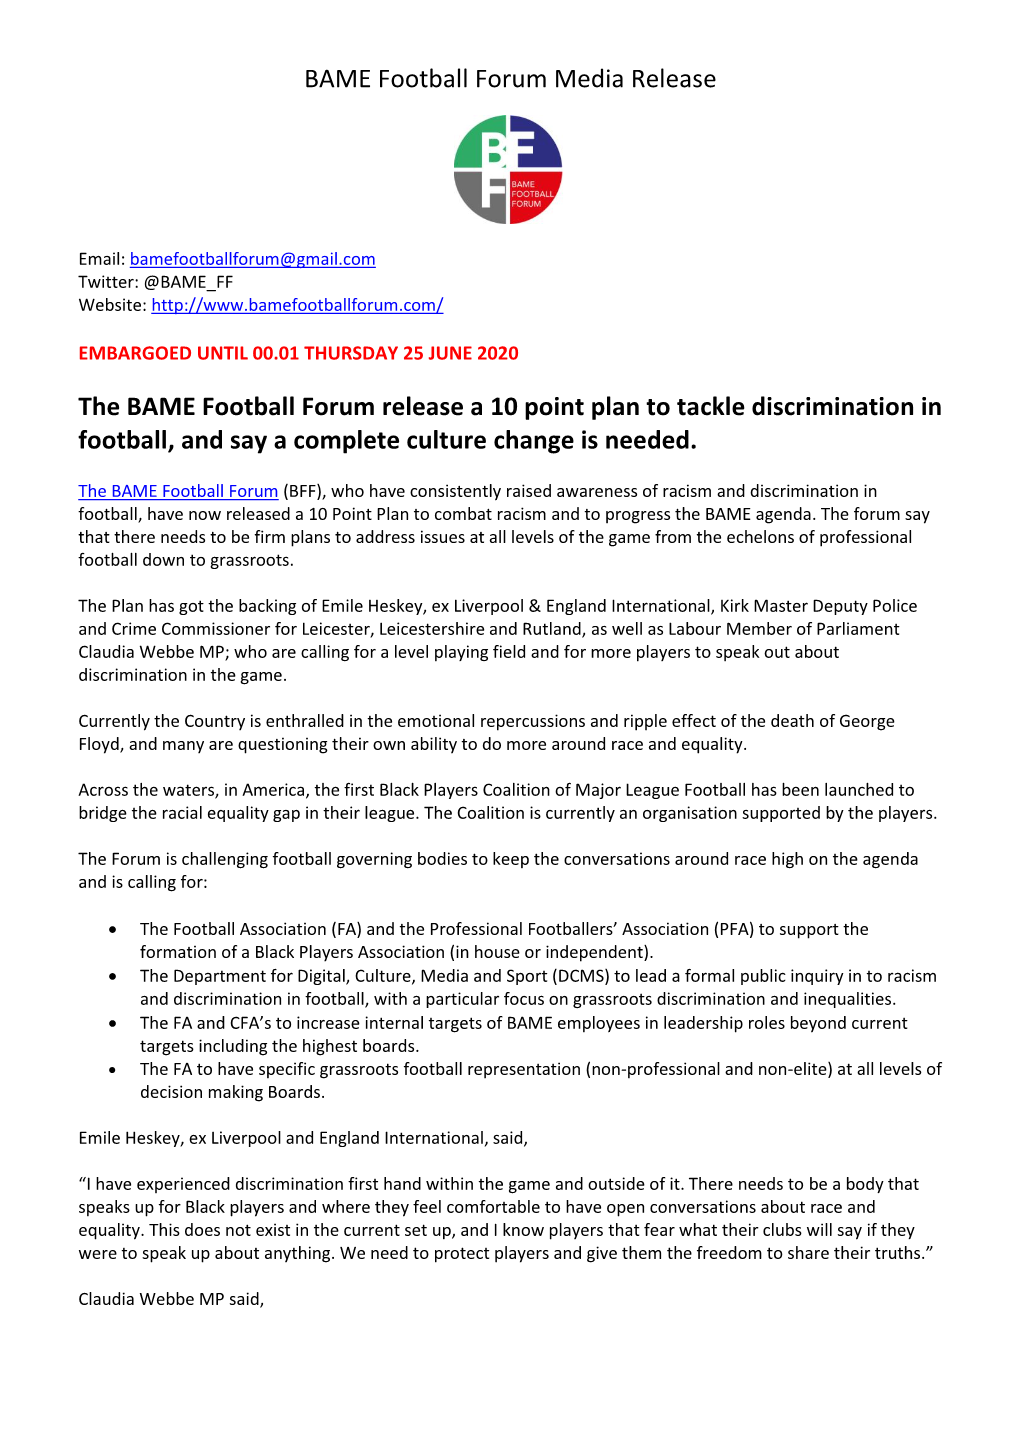 BFF 10 Point Plan Media Release